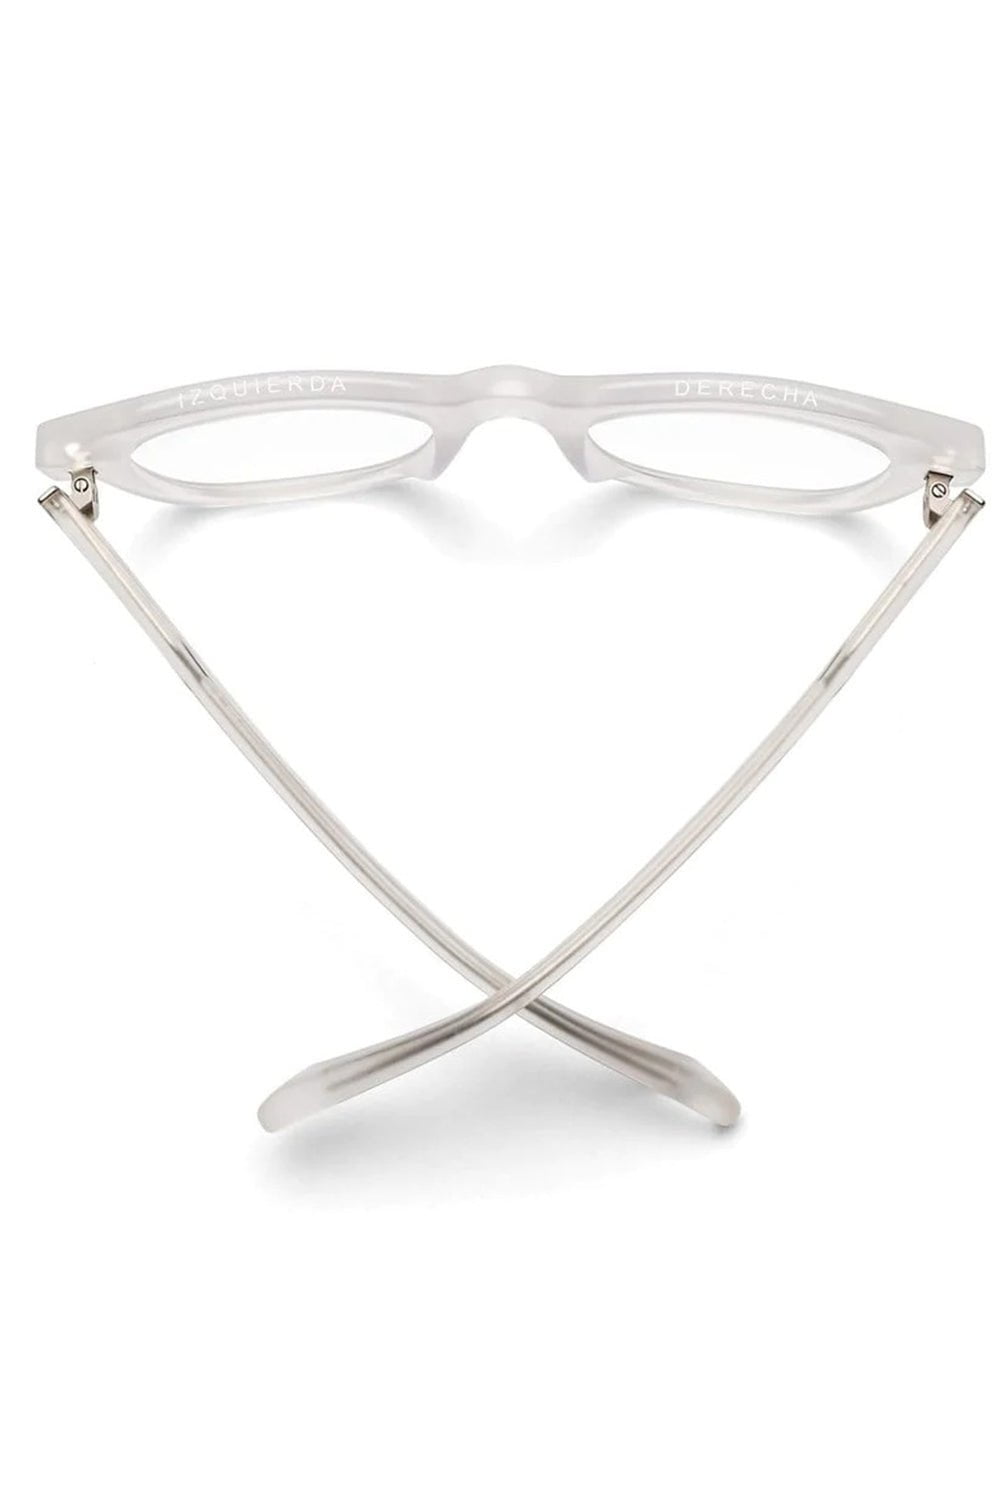 D28 Reading Glasses - Fog ACCESSORIEEYEWEAR CADDIS   